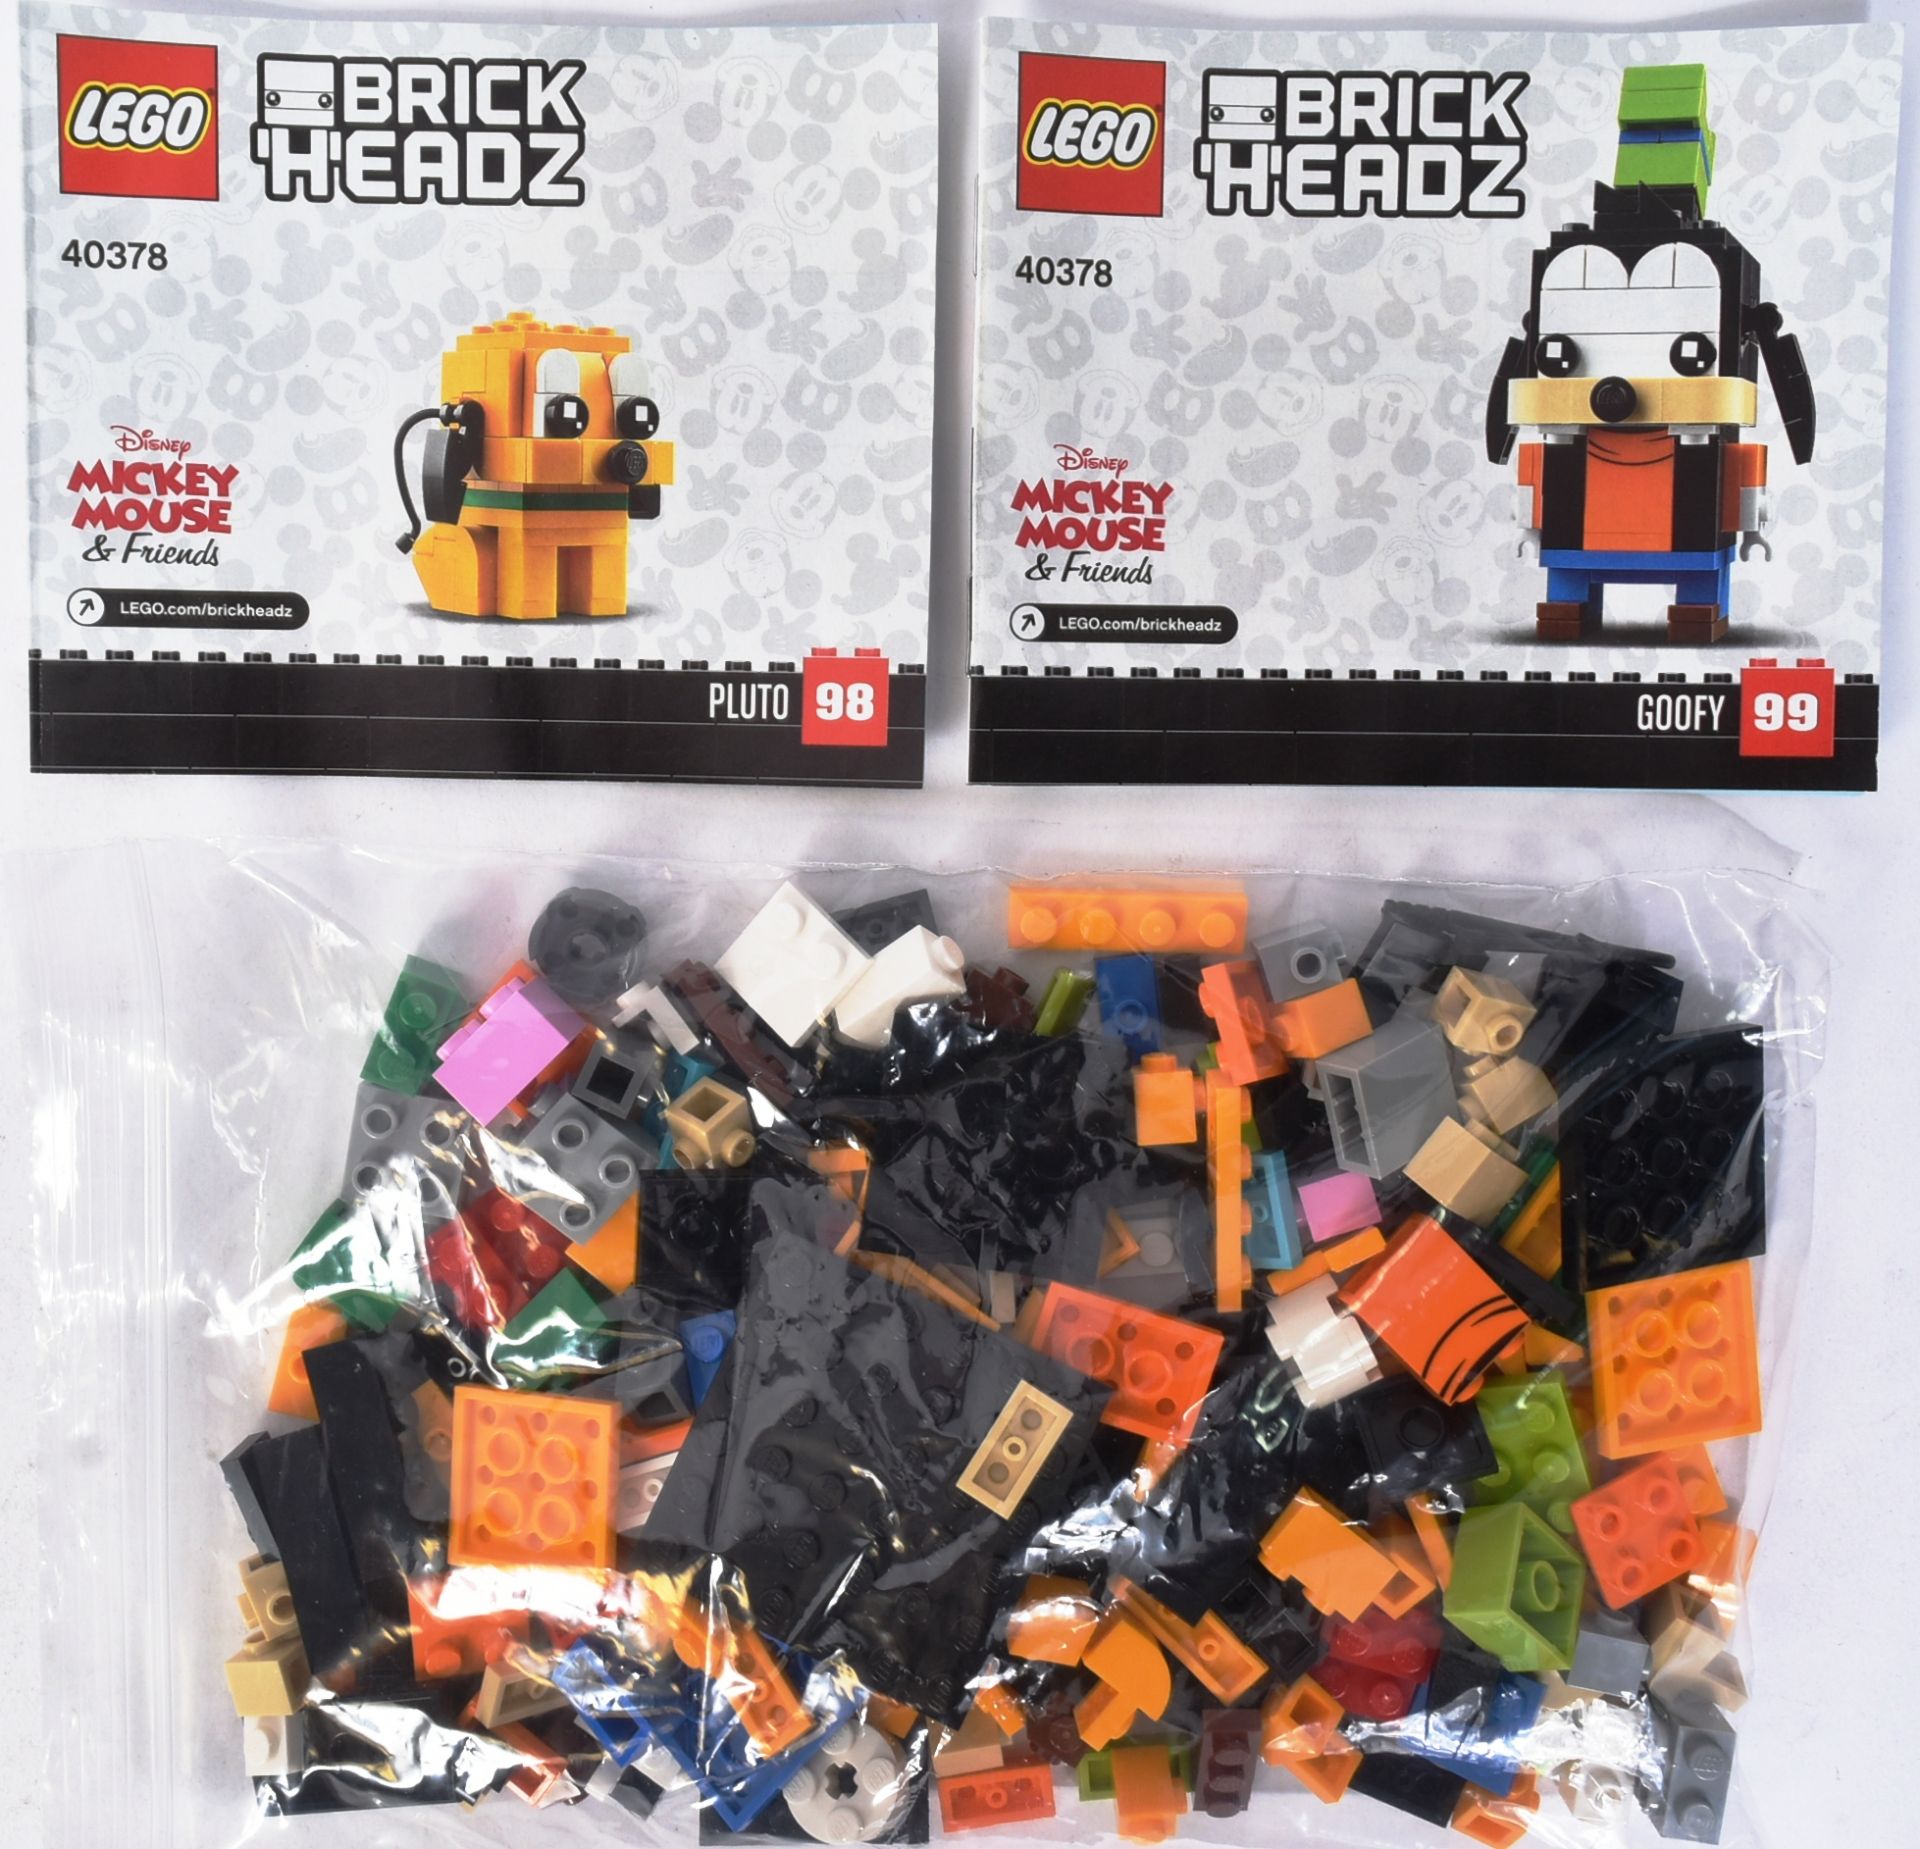 LEGO - BRICKHEADZ - DONALD DUCK, PLUTO & GOOFY - Image 3 of 3